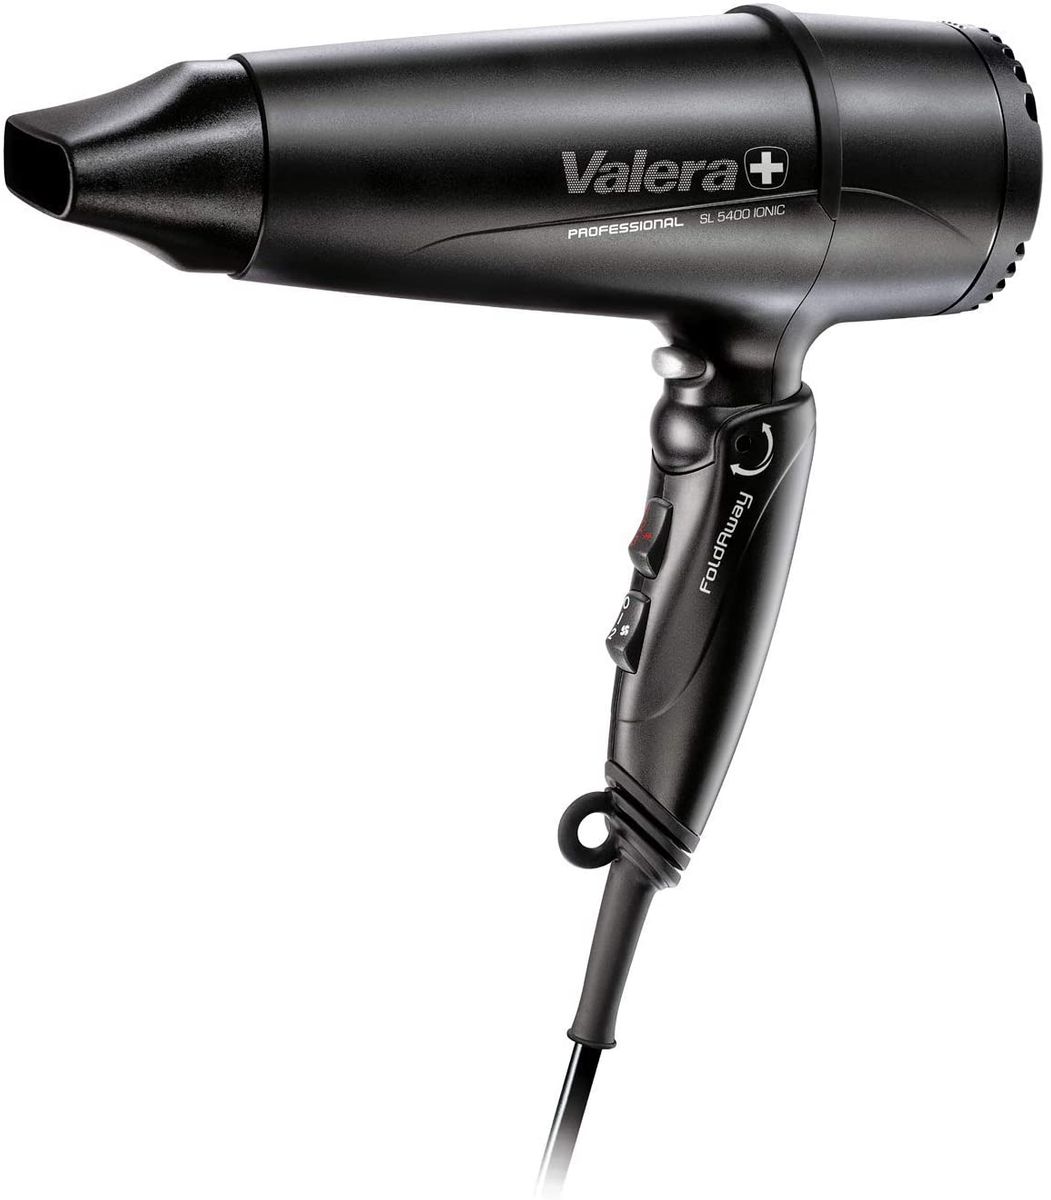 Valera Swiss Light Fold-Away 5400 professional ionic hair dryer, foldable and lightweight, 2000 watts, color black.